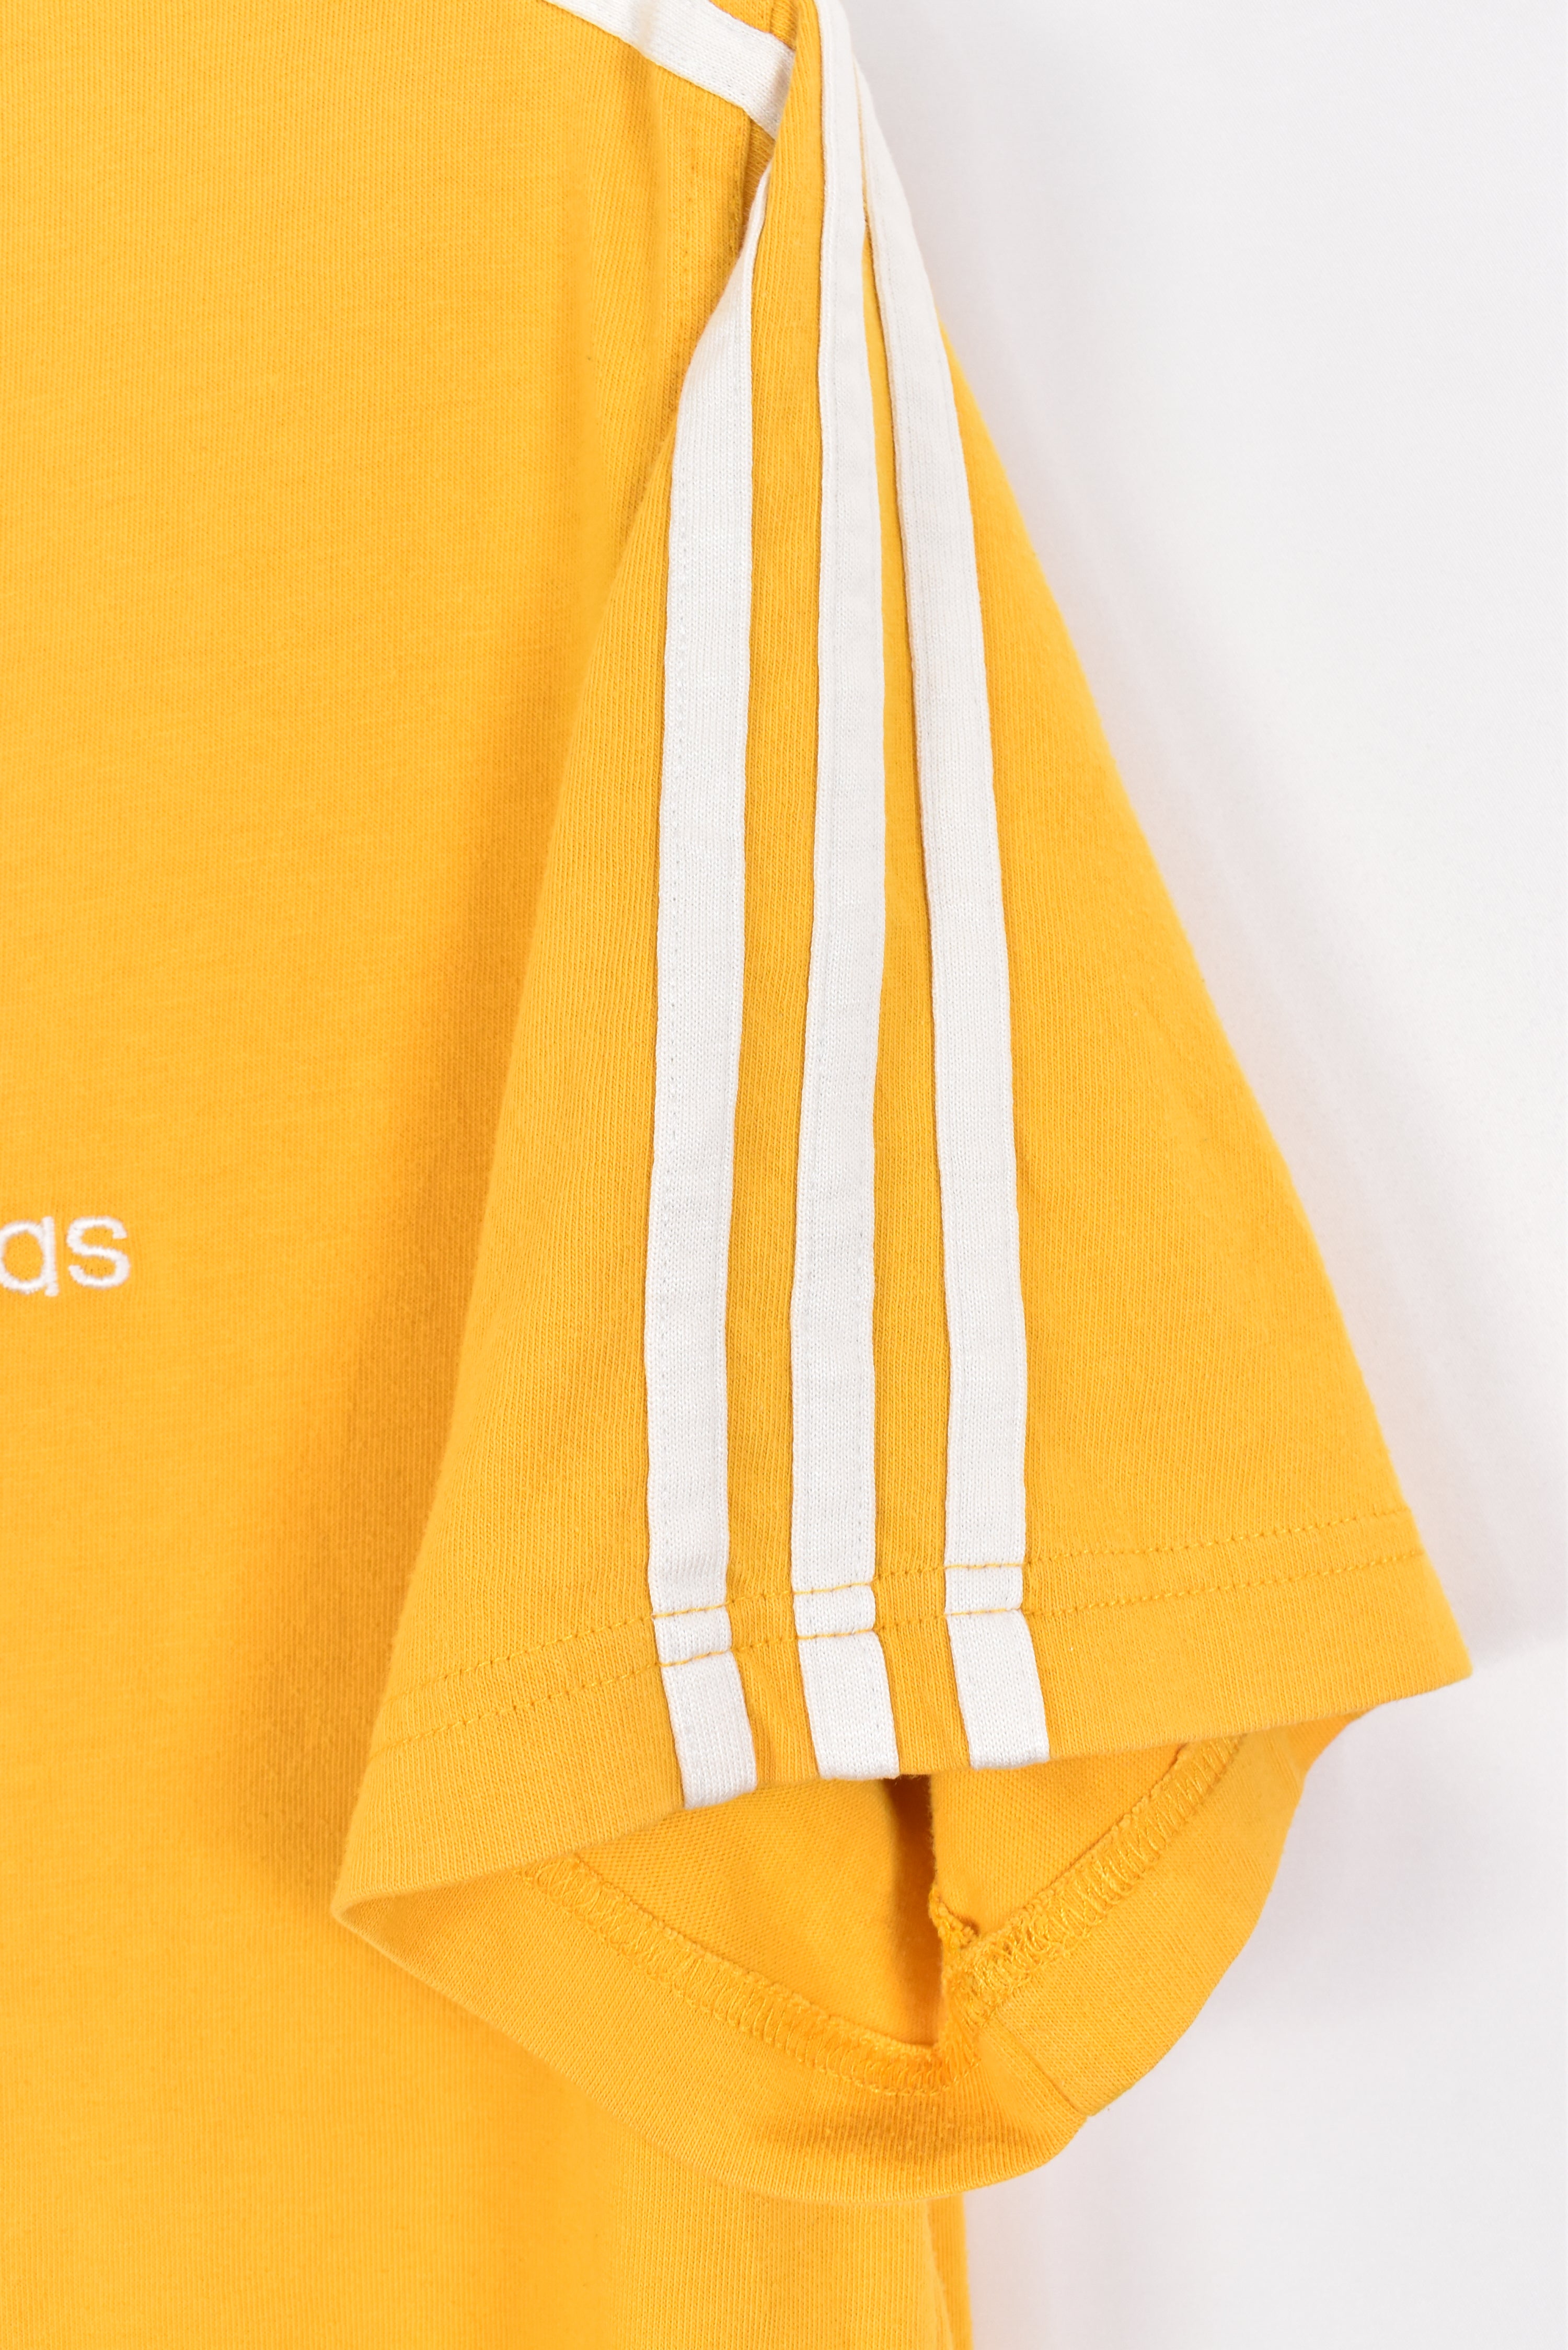 Vintage Adidas shirt, yellow embroidered tee - AU Large ADIDAS